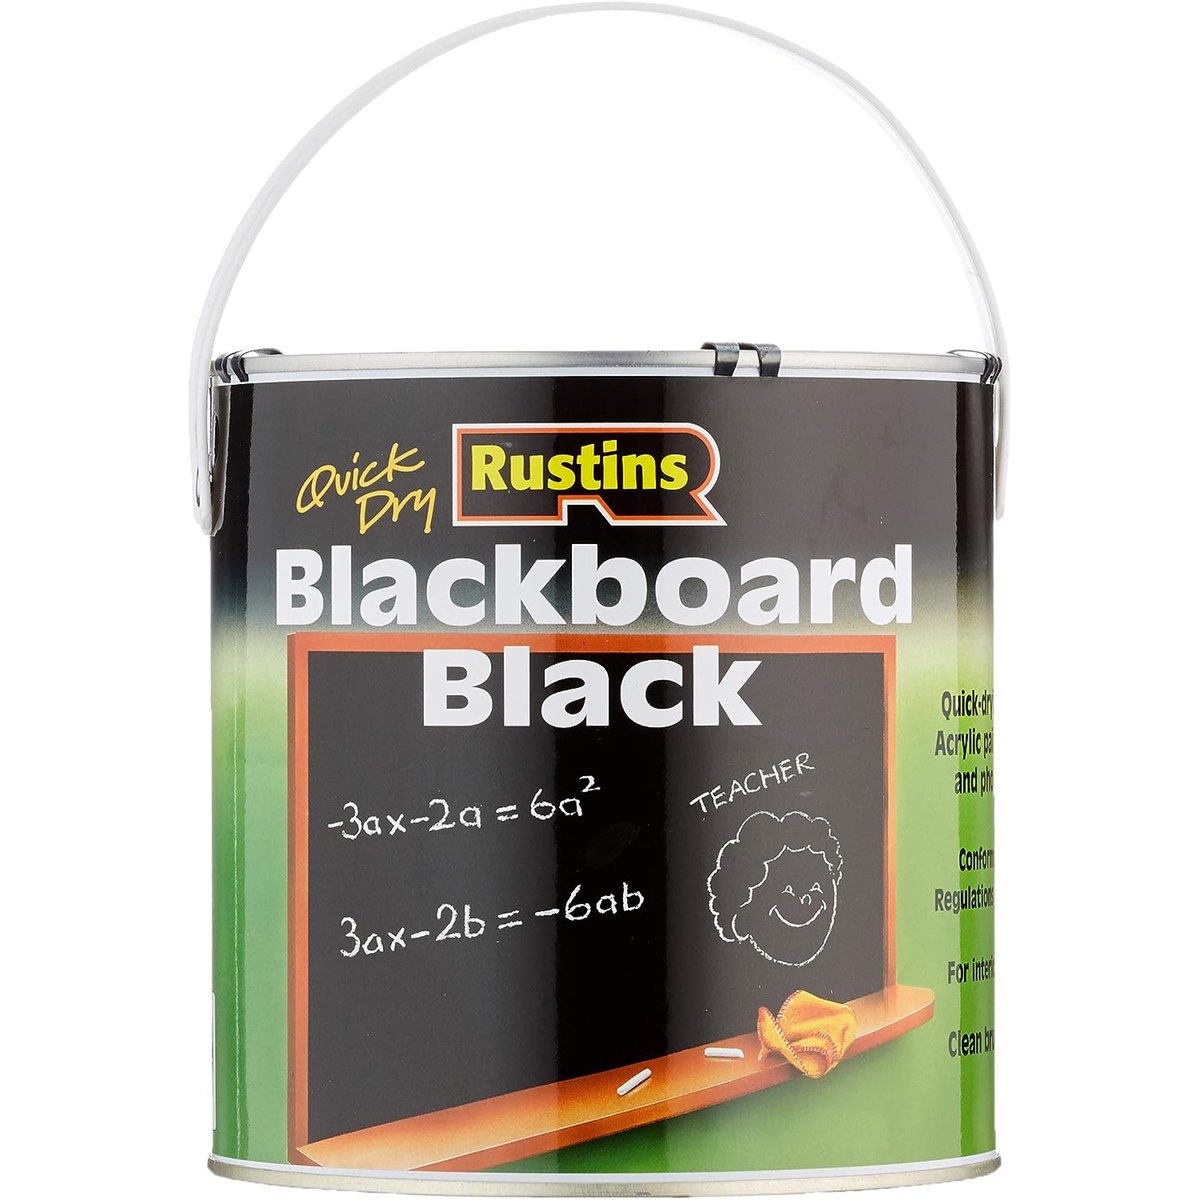 Rustins Quick Dry Blackboard Paint Black 2.5 Litre